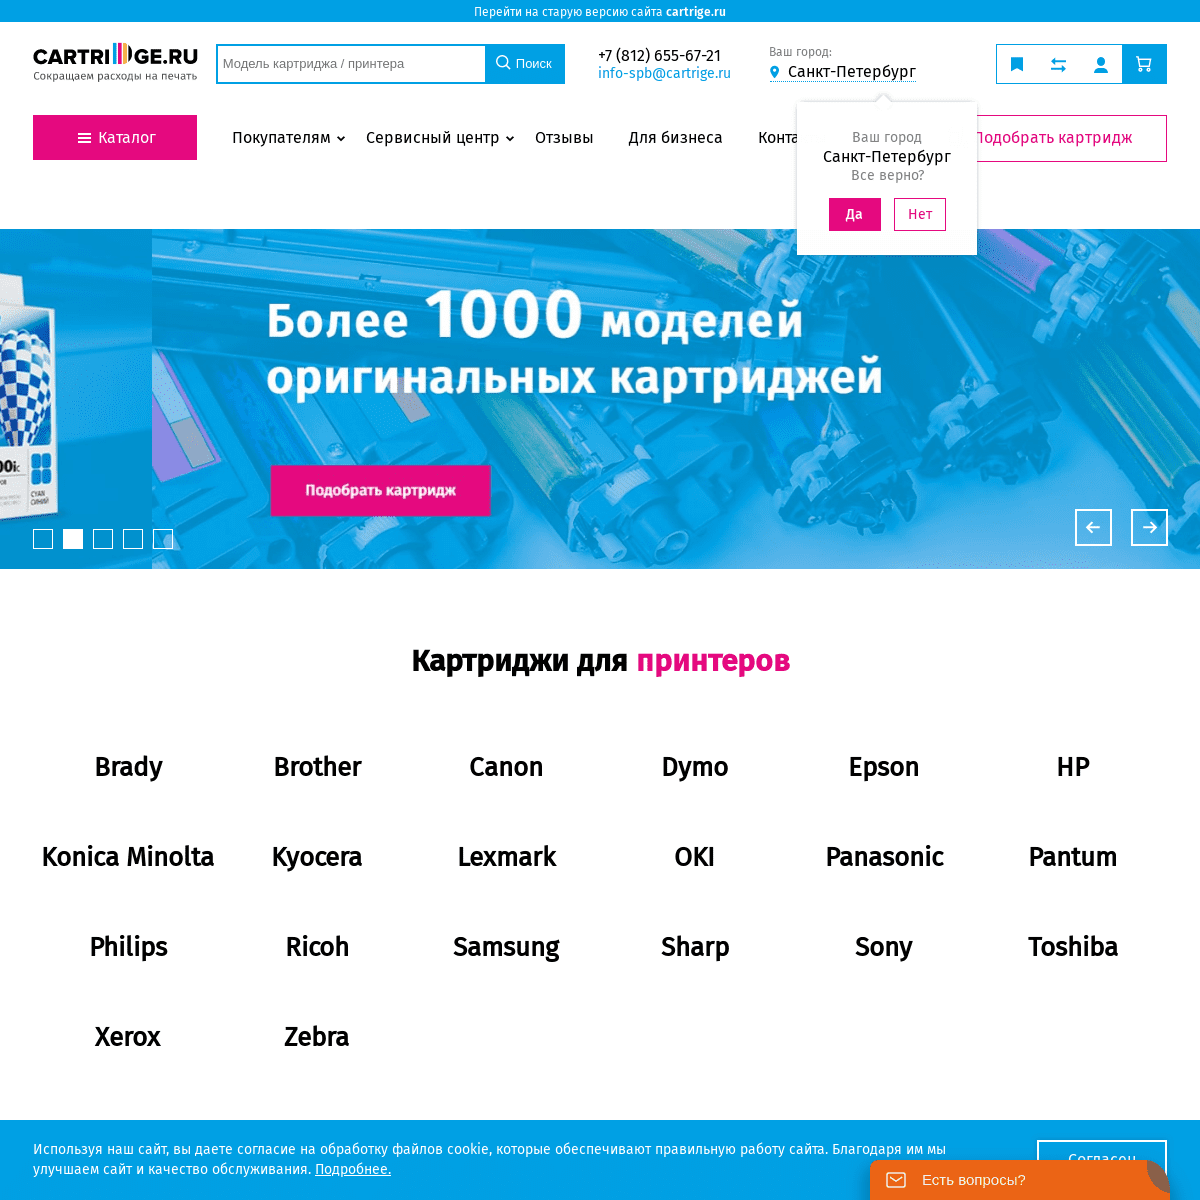 A complete backup of cartrige.ru